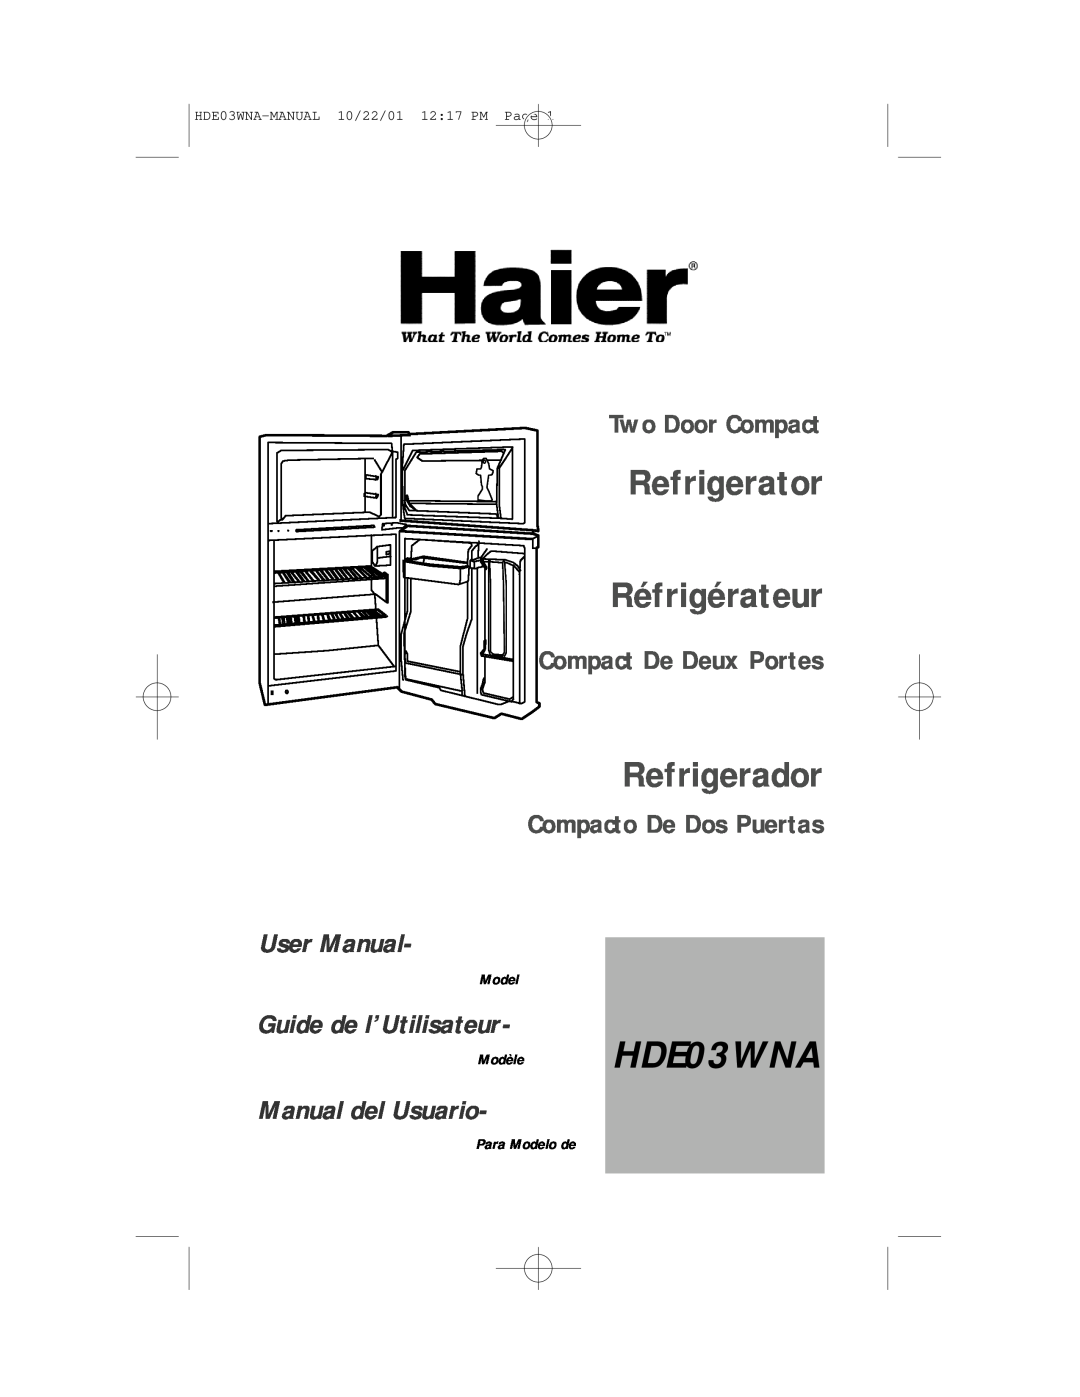 Haier user manual Para Modelo de, ModèleHDE03WNA, Refrigerator Réfrigérateur, Refrigerador, Two Door Compact 